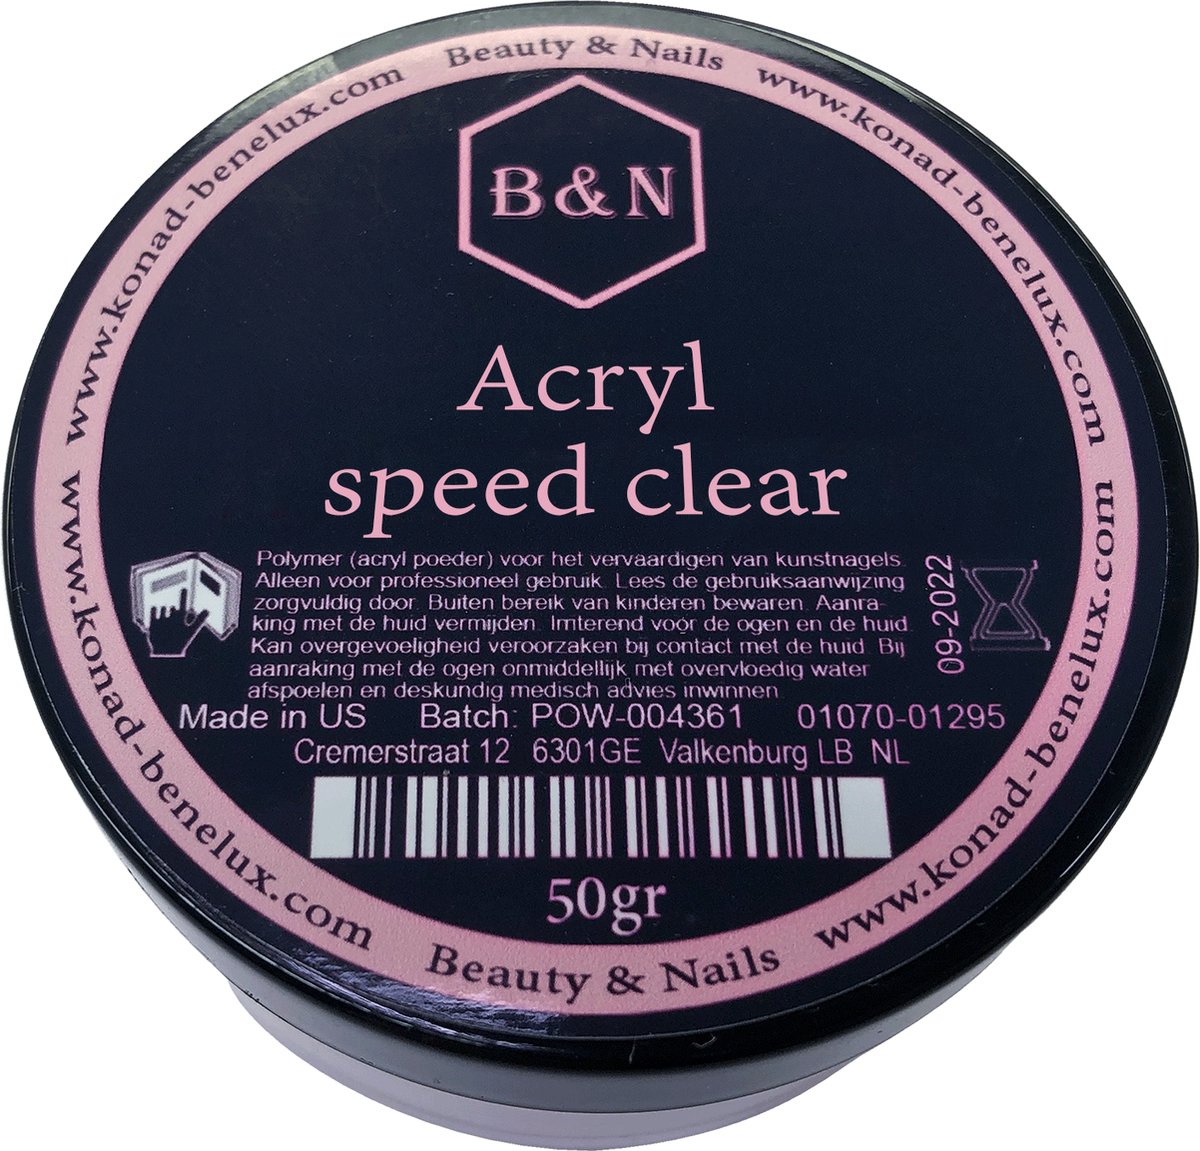 Acryl - speed clear - 50 gr | B&N - acrylpoeder - VEGAN - acrylpoeder